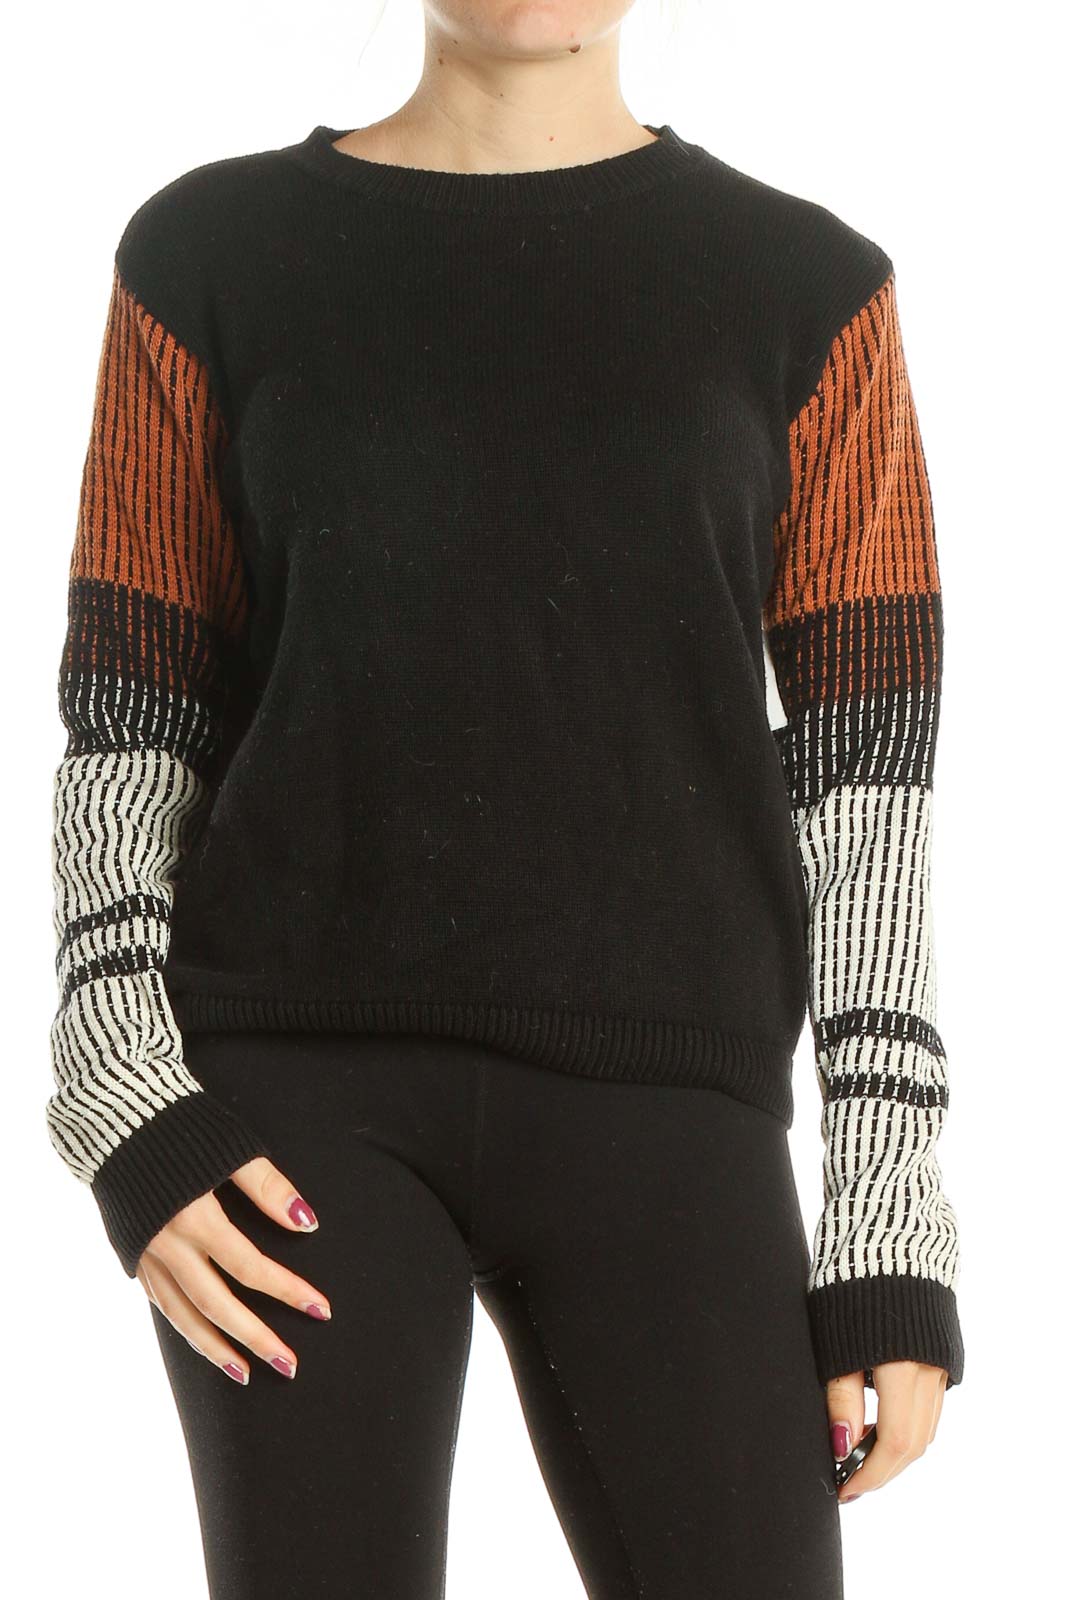 Black Orange White Retro Sweater Front